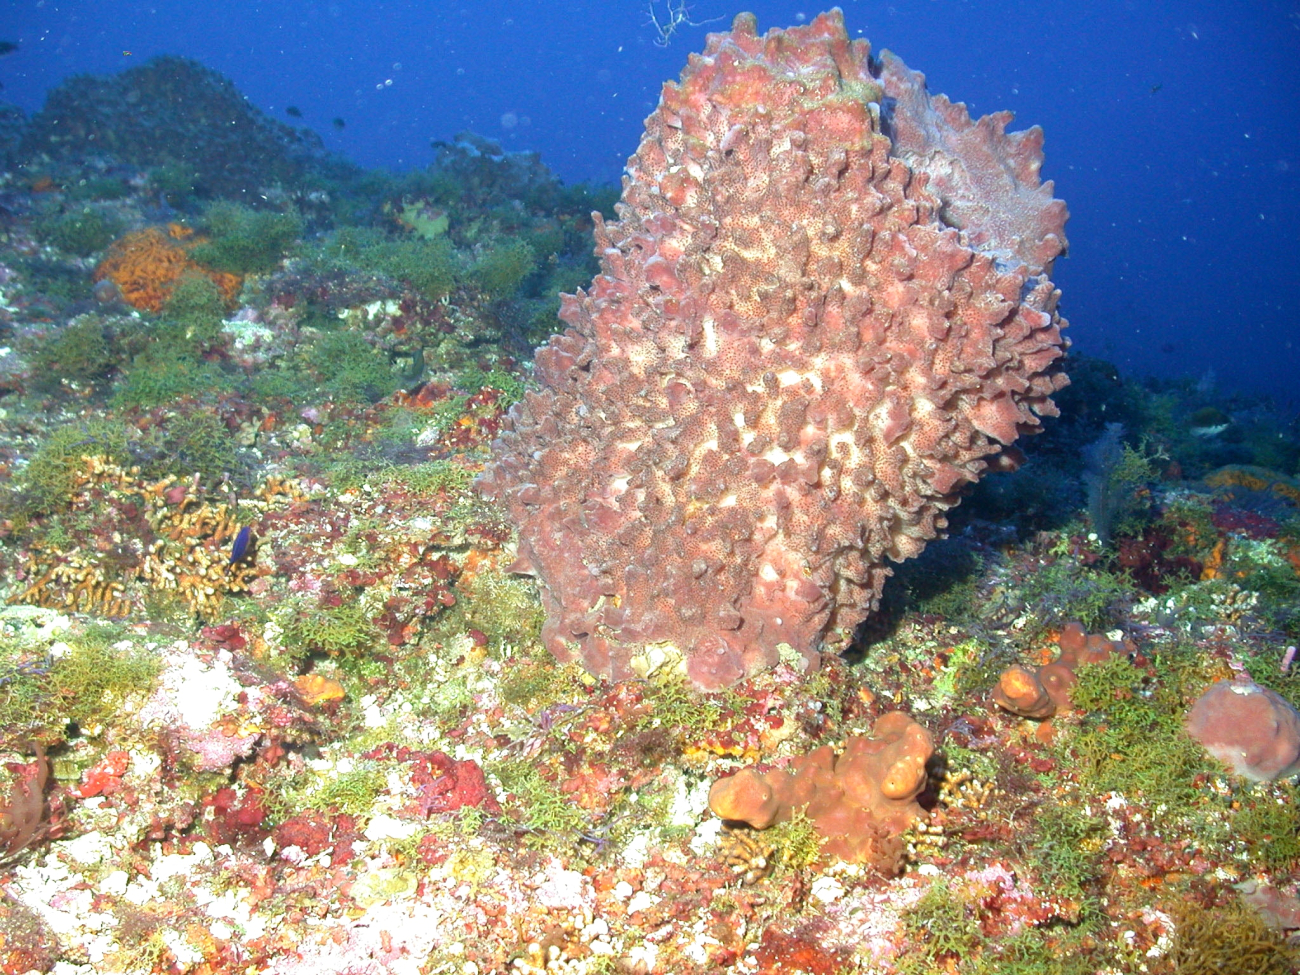 A barrel sponge (Xaestospongia sp